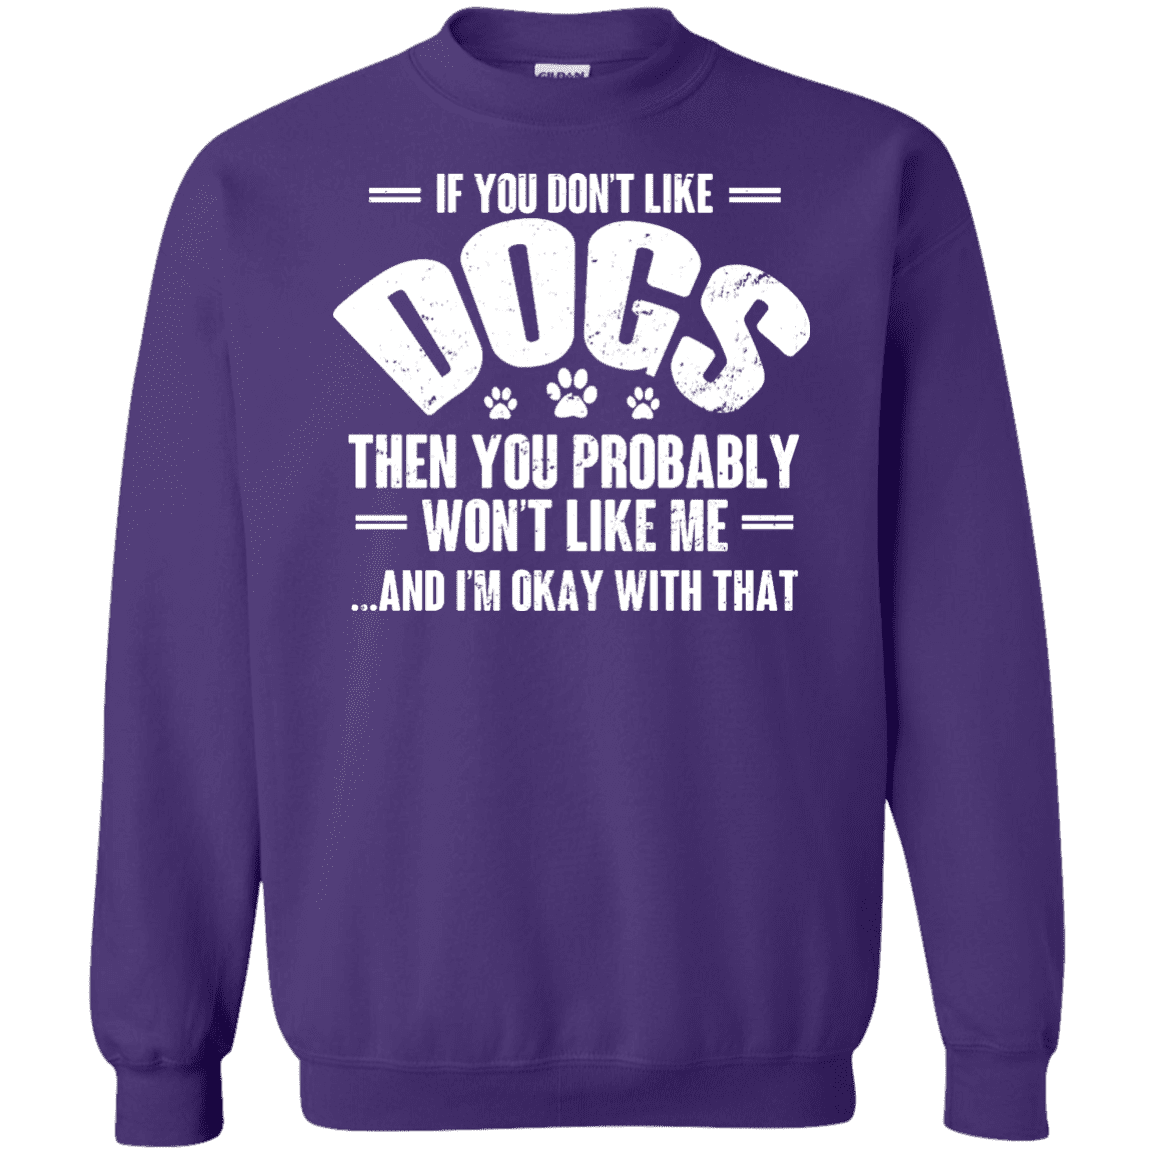 If You Don't Like Dogs - Sweatshirt.